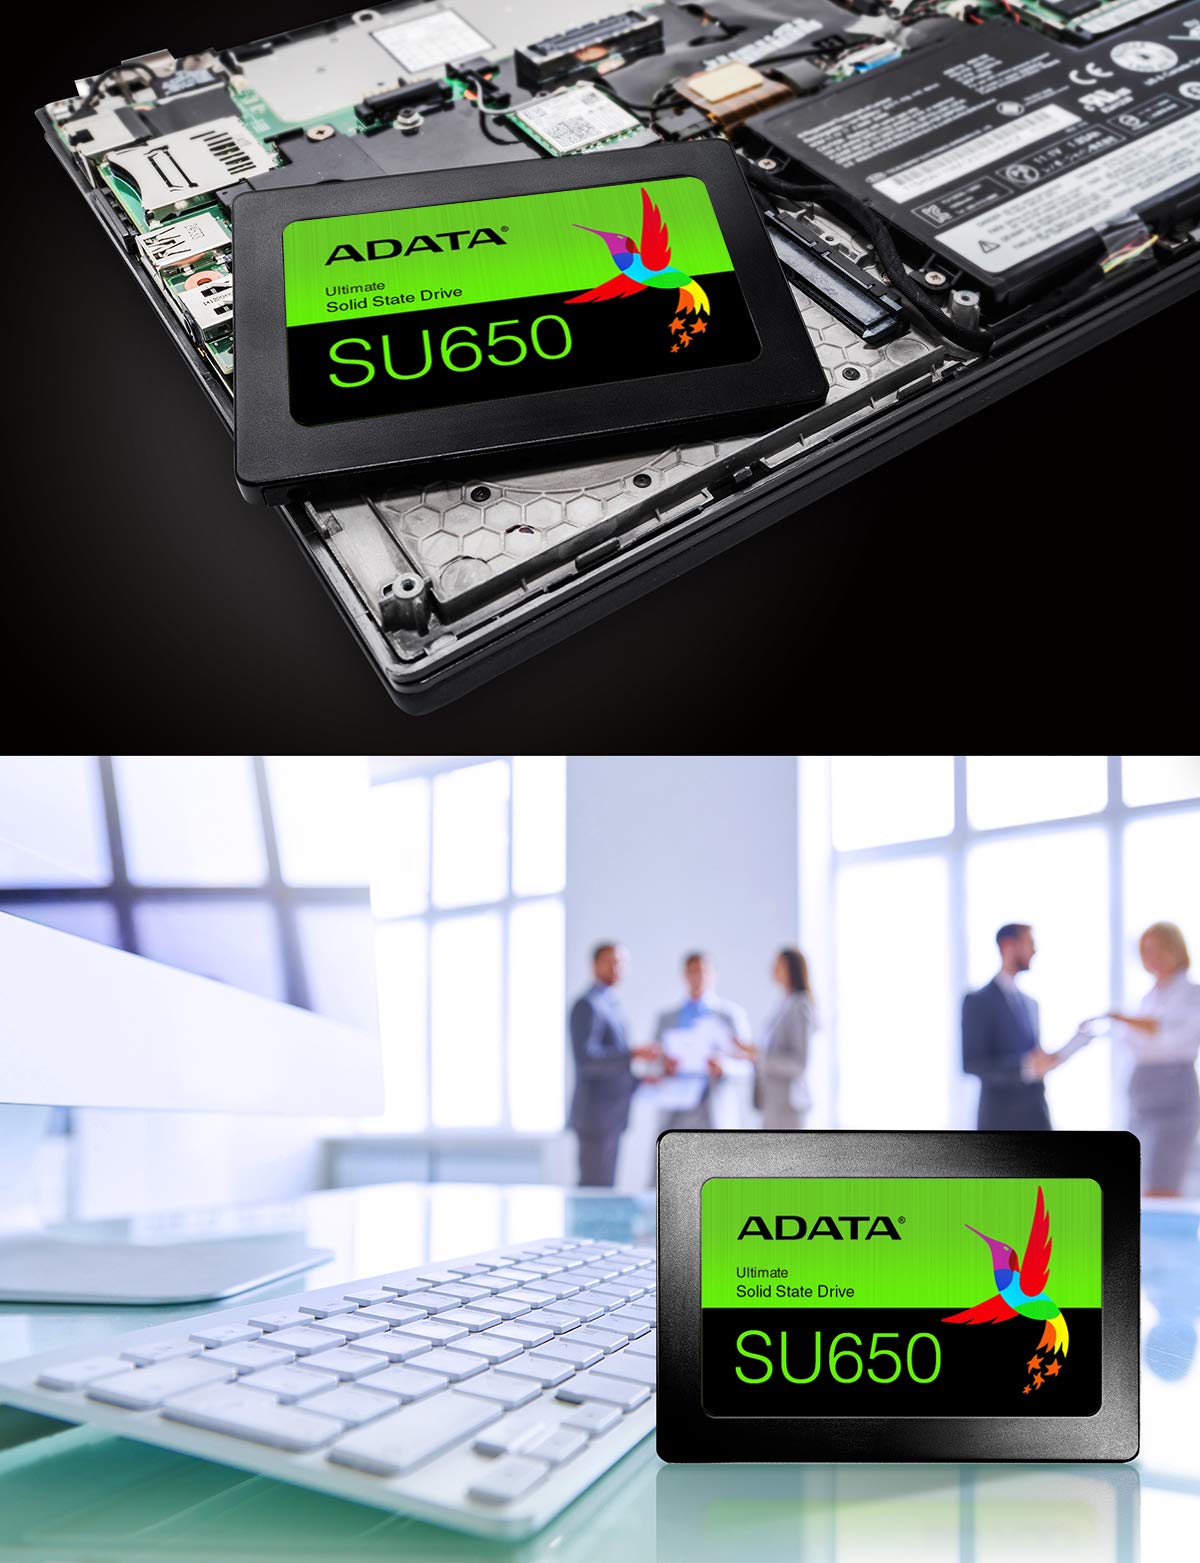 ADATA SU650 SSD 240GB